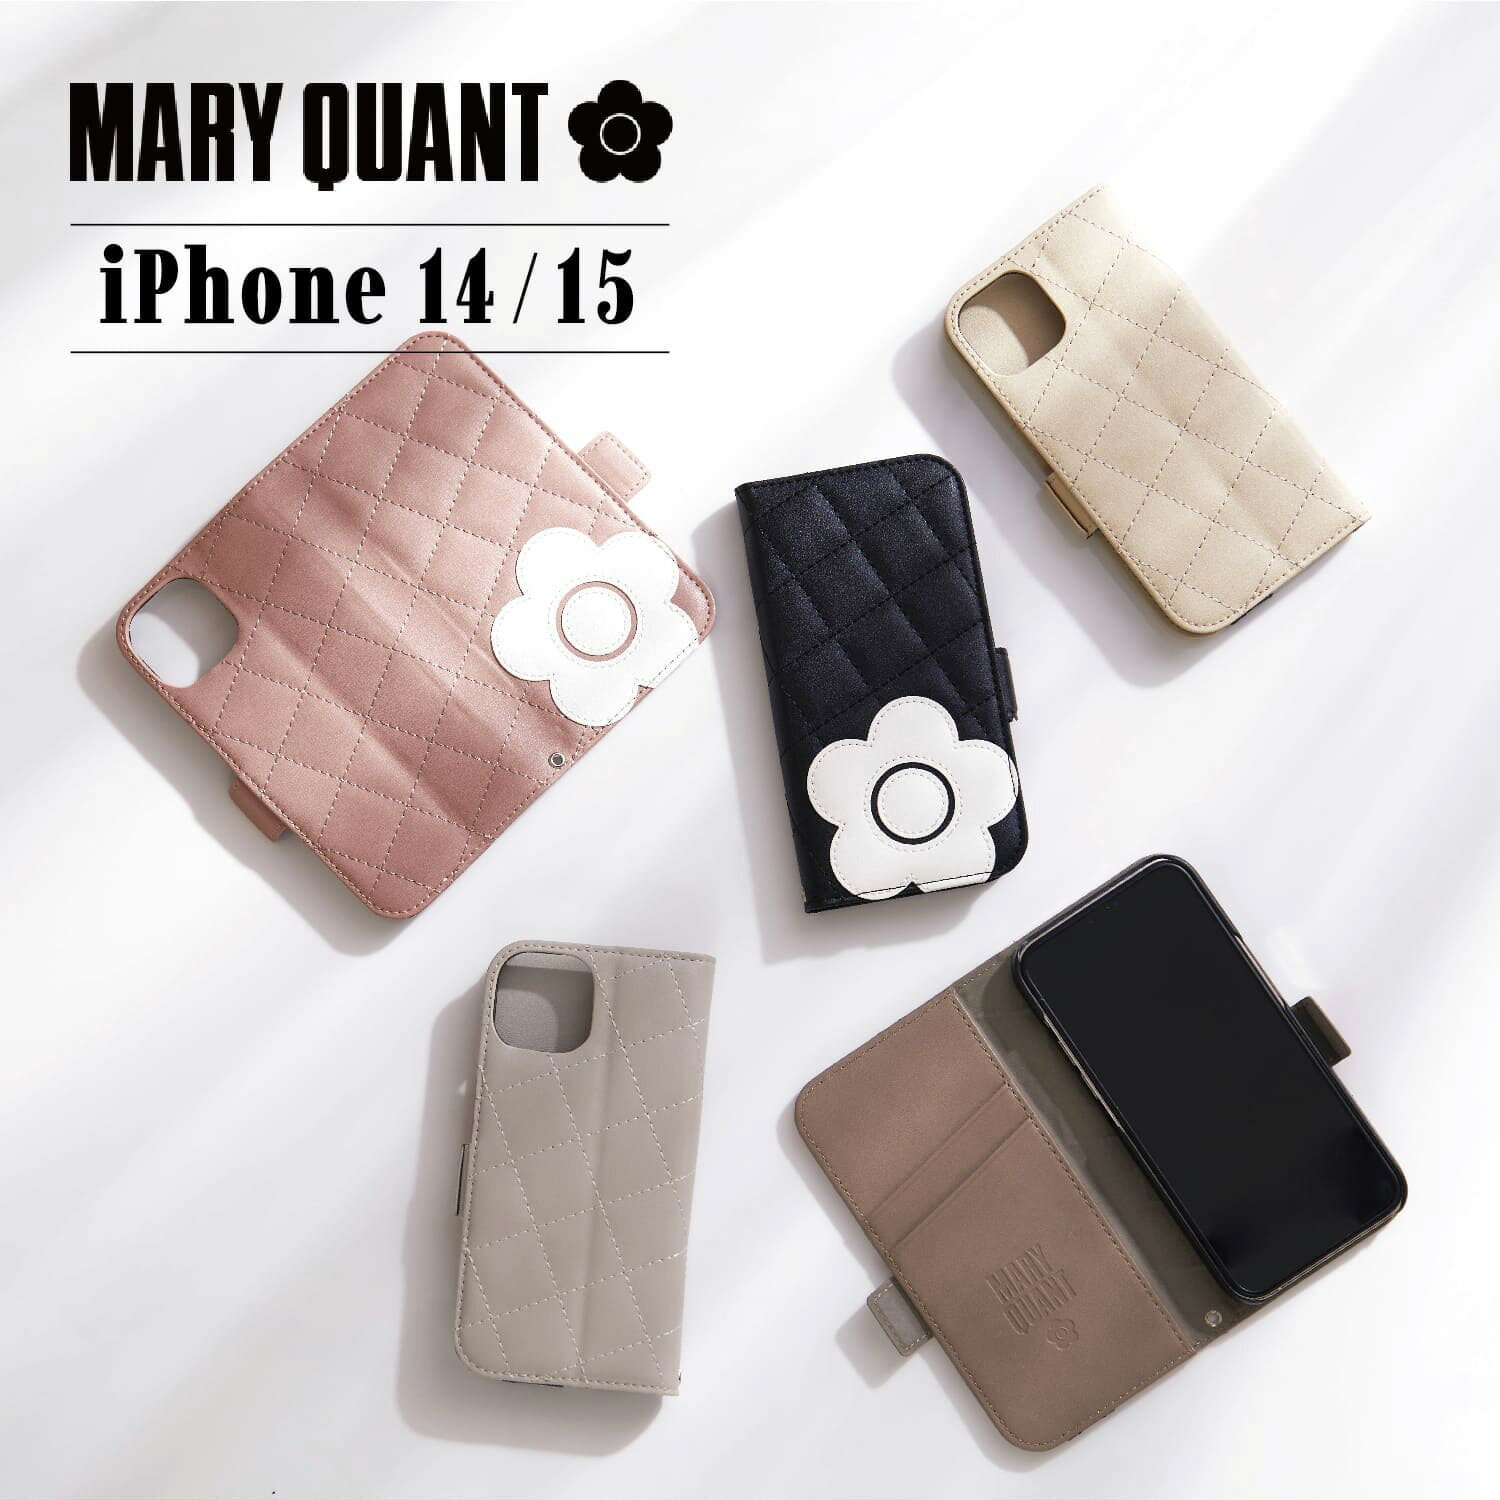 MARY QUANT PU QUILT LEATHER BOOK TYPE CASE マリークヮント iPhone 15 14 ケース スマホケース 携帯 レディース スタンド ブラック ホワイト グレー ブラウン ピンク 黒 白 母の日